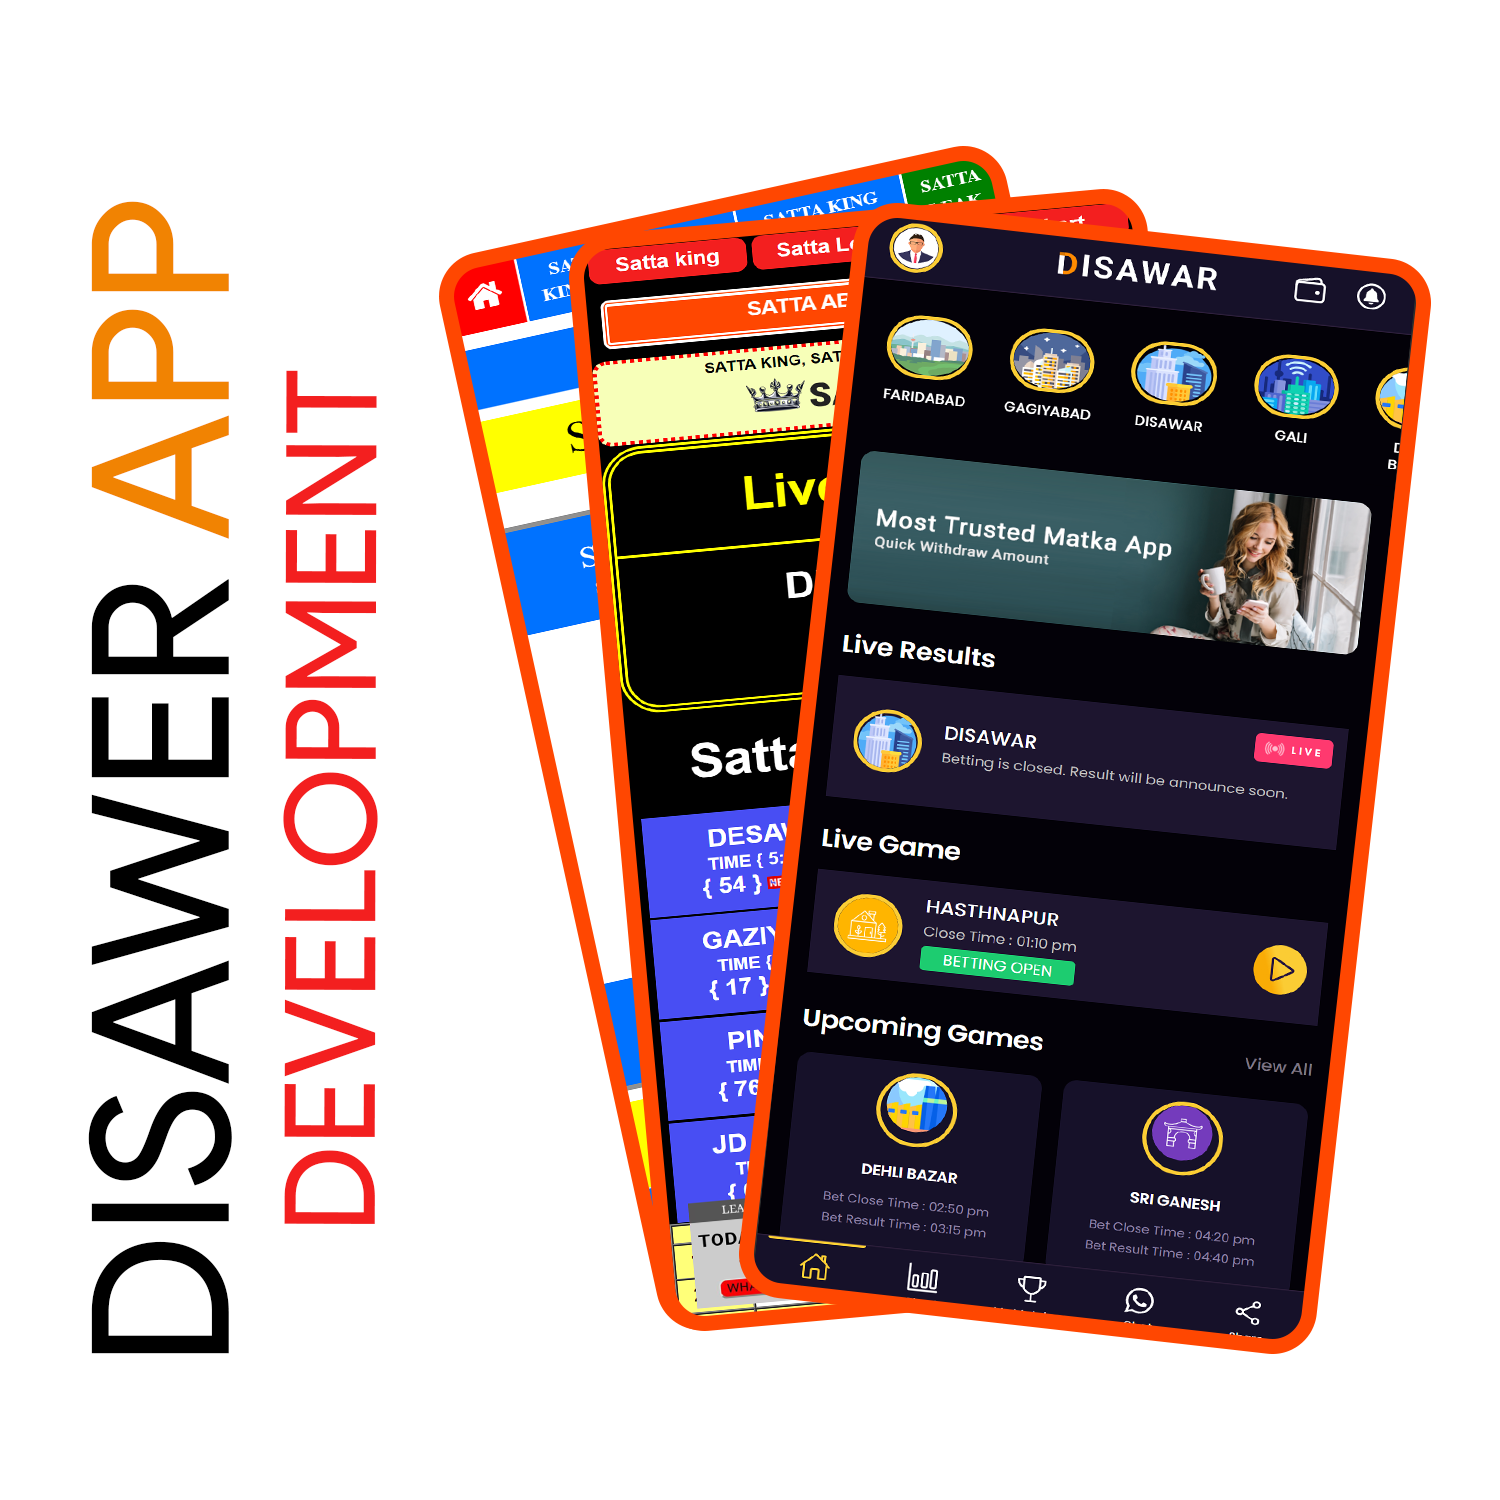 Disawer Software Development, gali software development, Faridabad Software services